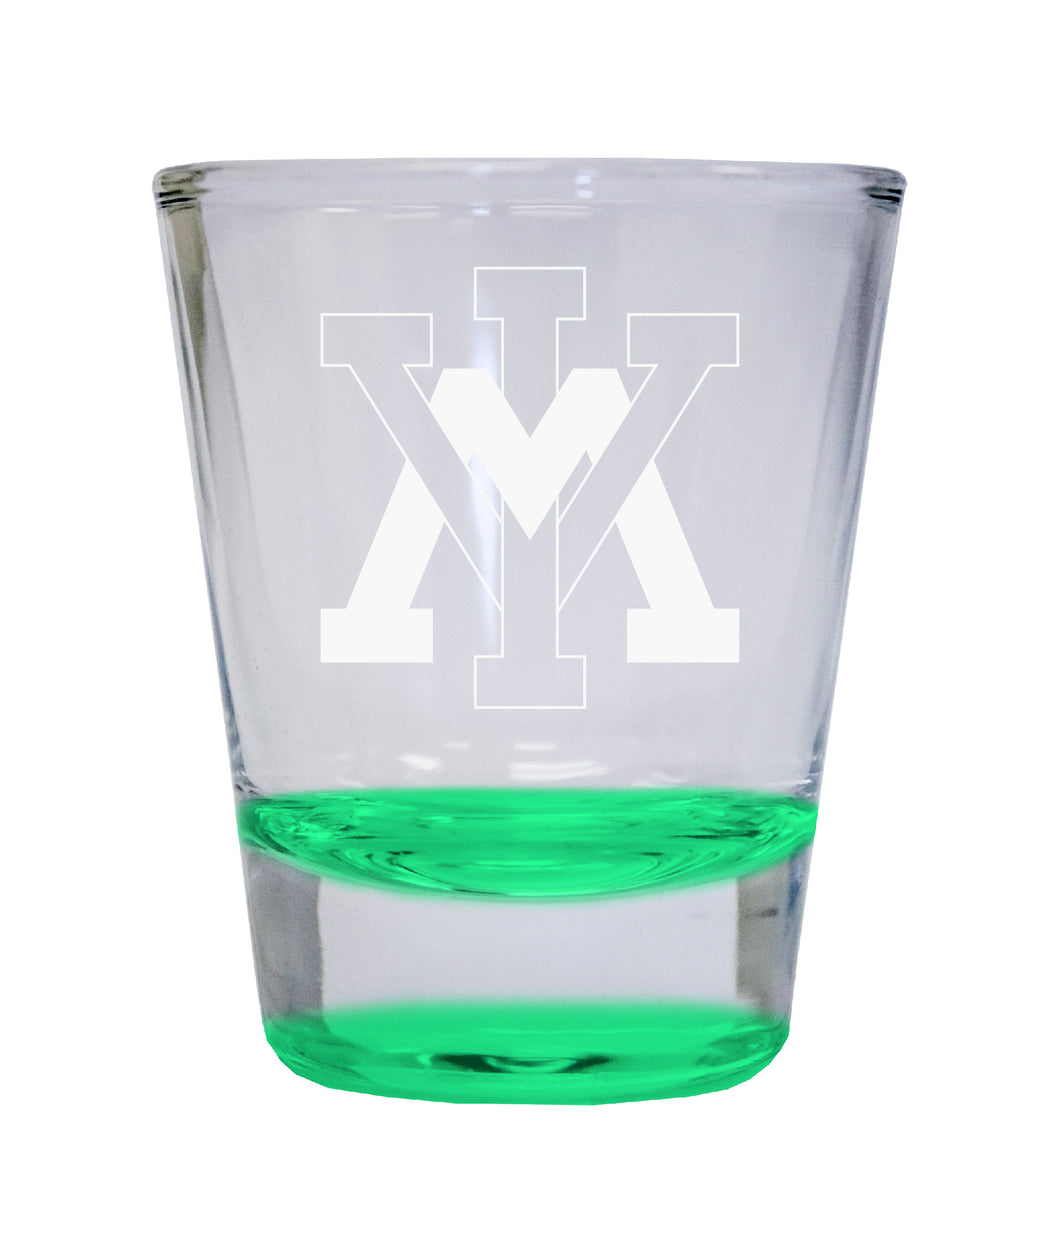 VMI Keydets Etched Round Shot Glass 2 oz Green